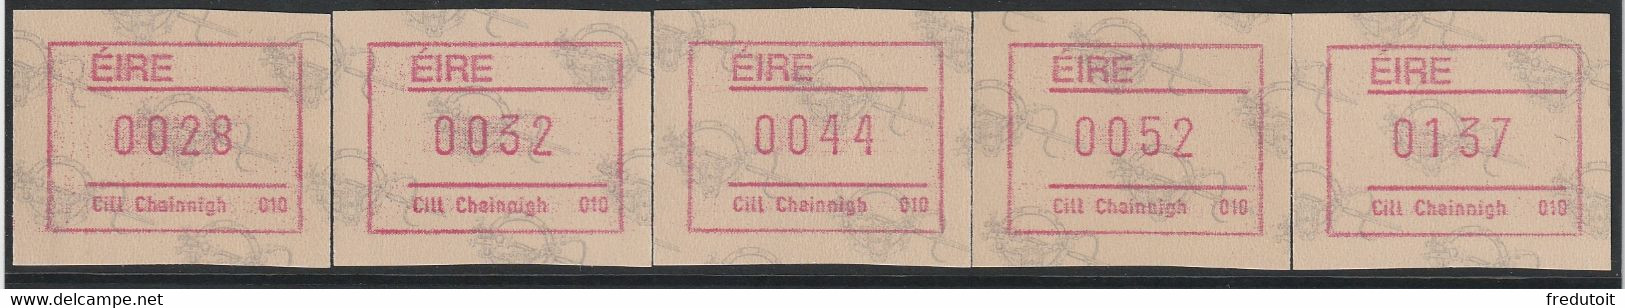 IRLANDE - Timbres Distributeurs / FRAMA  ATM - N°4** (1992) Cill Chainnigh 010 - Automatenmarken (Frama)